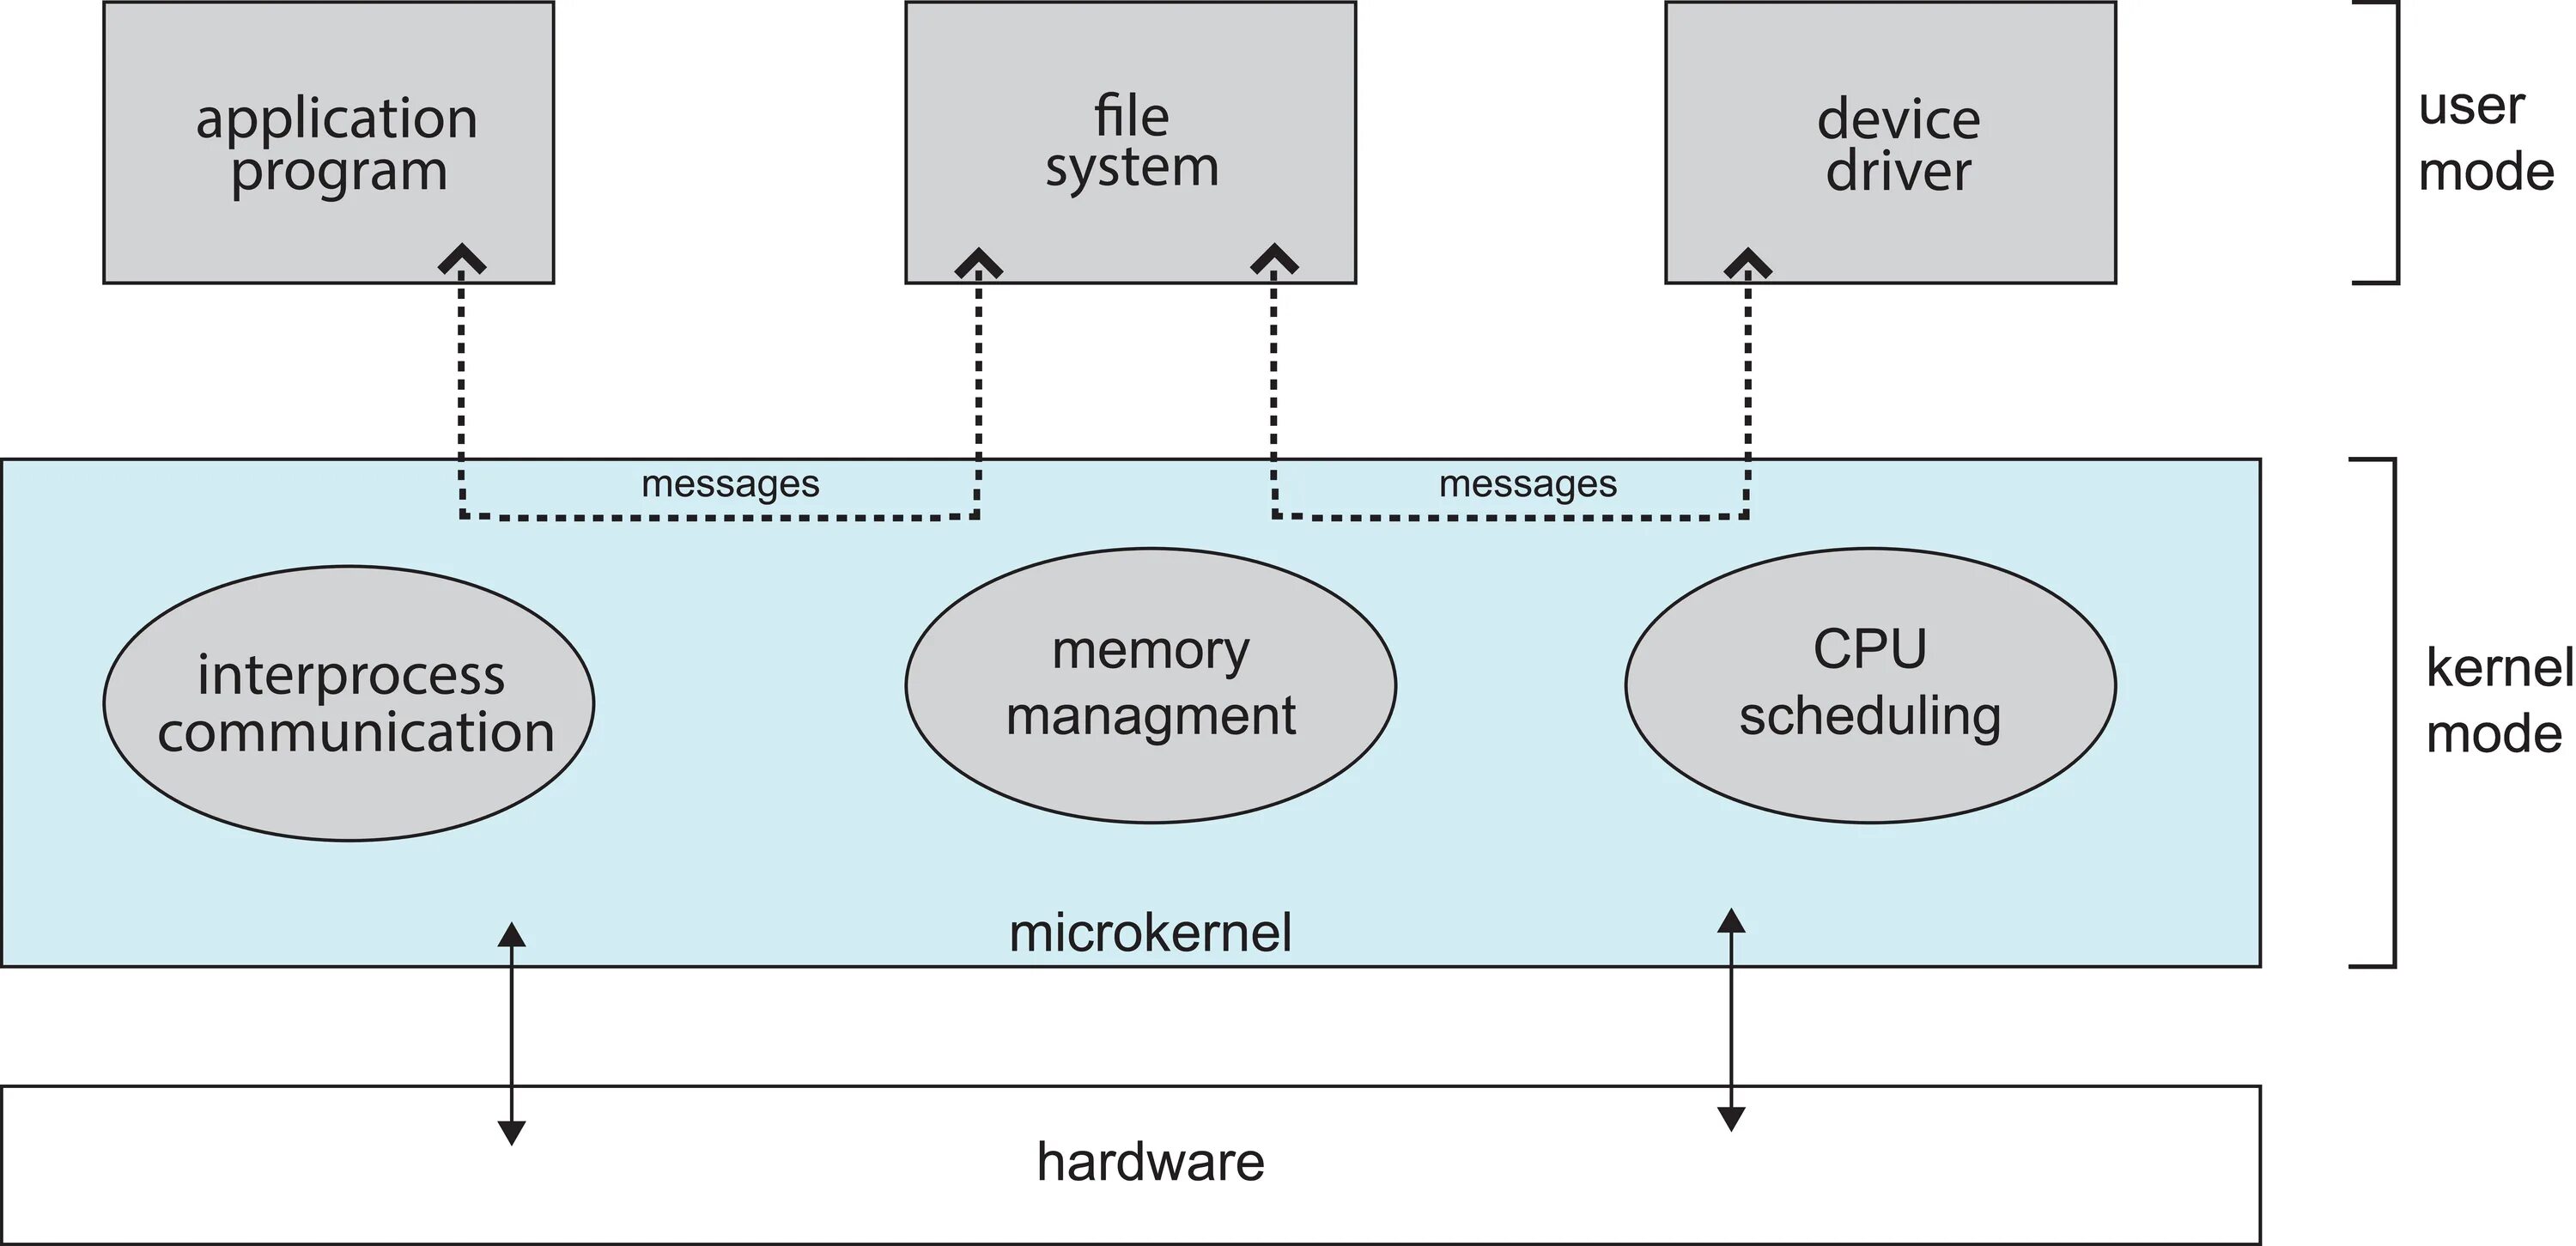 Drive user. Microkernel архитектура. QNX microkernel. Архитектура Linux c microkernel. Архитектура на основе микроядра..